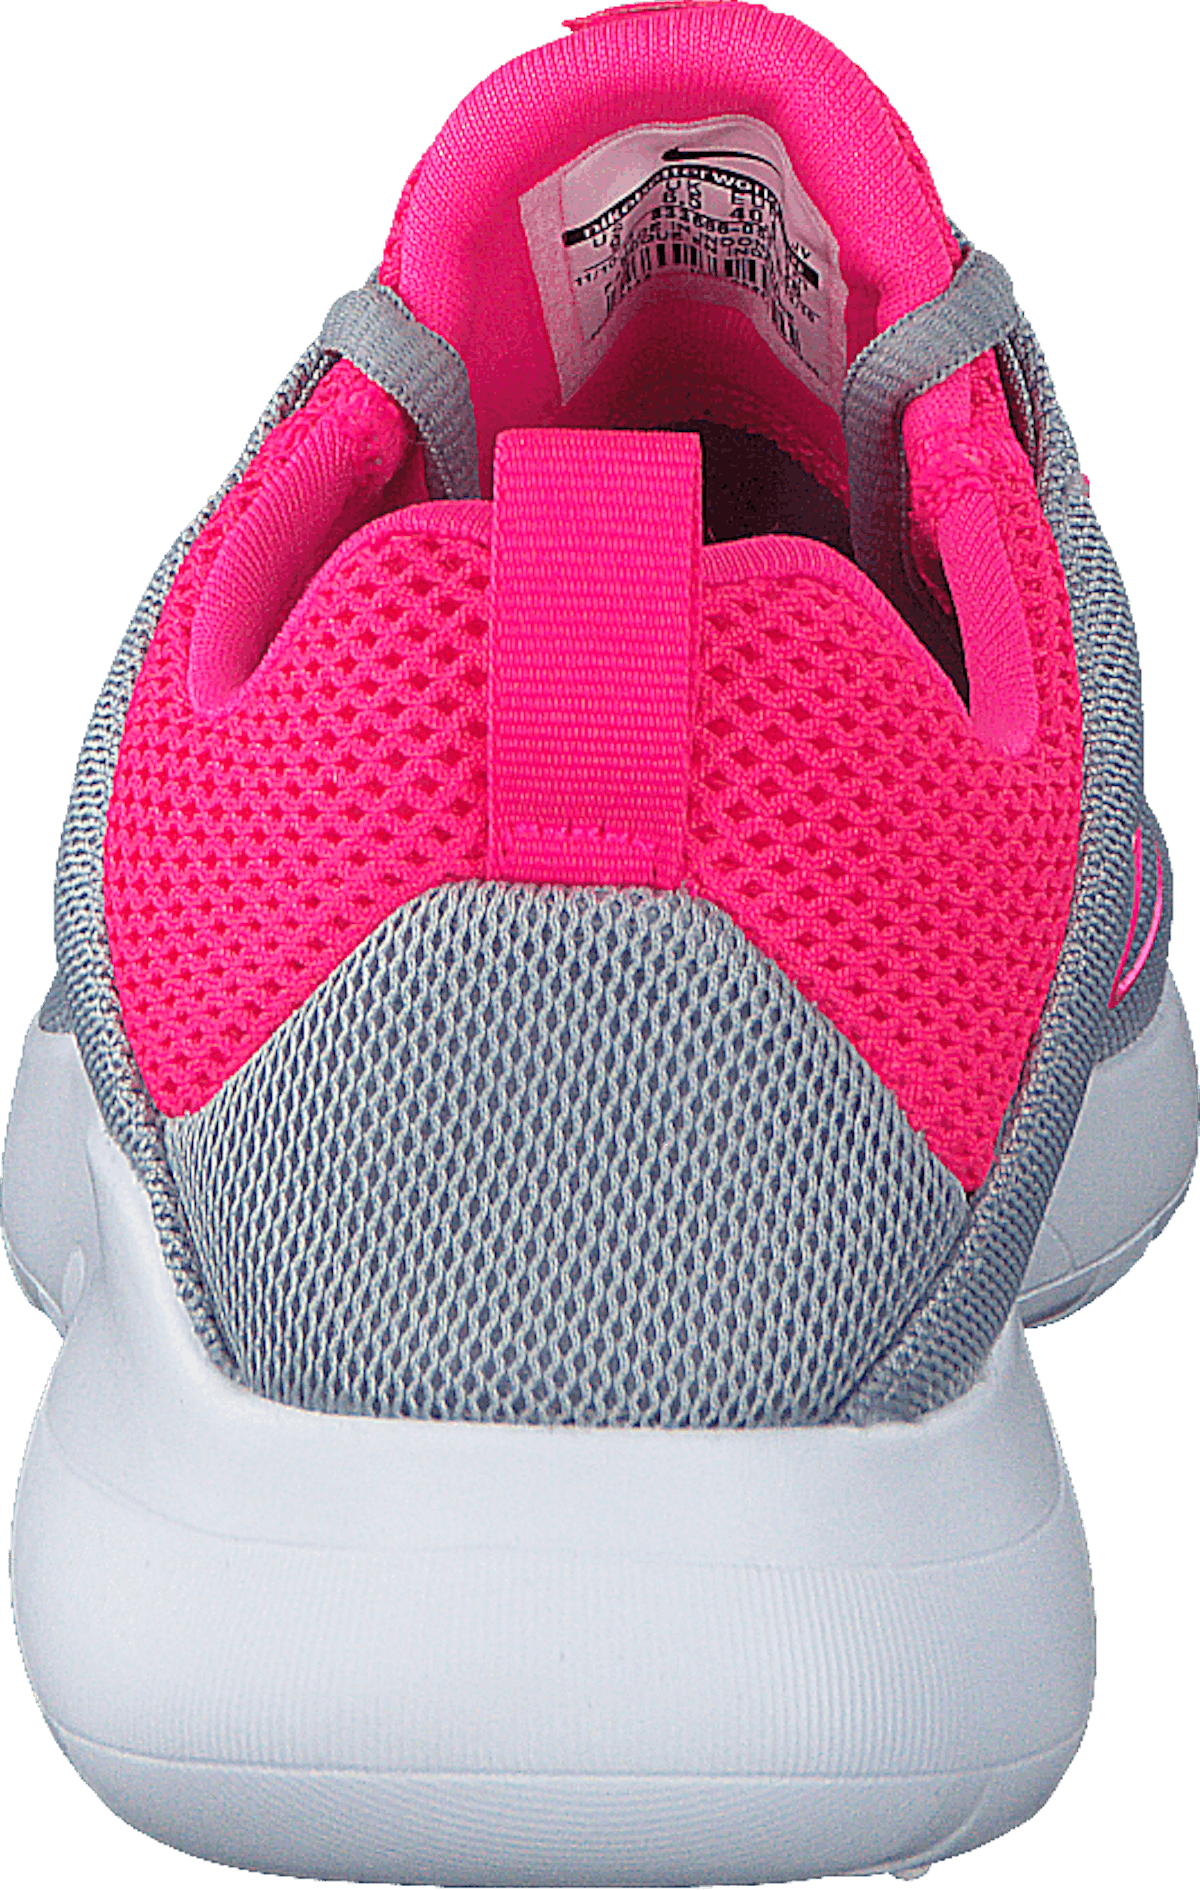 Wmns Nike Kaishi 2.0 Wolf Grey/Pink Blast-White